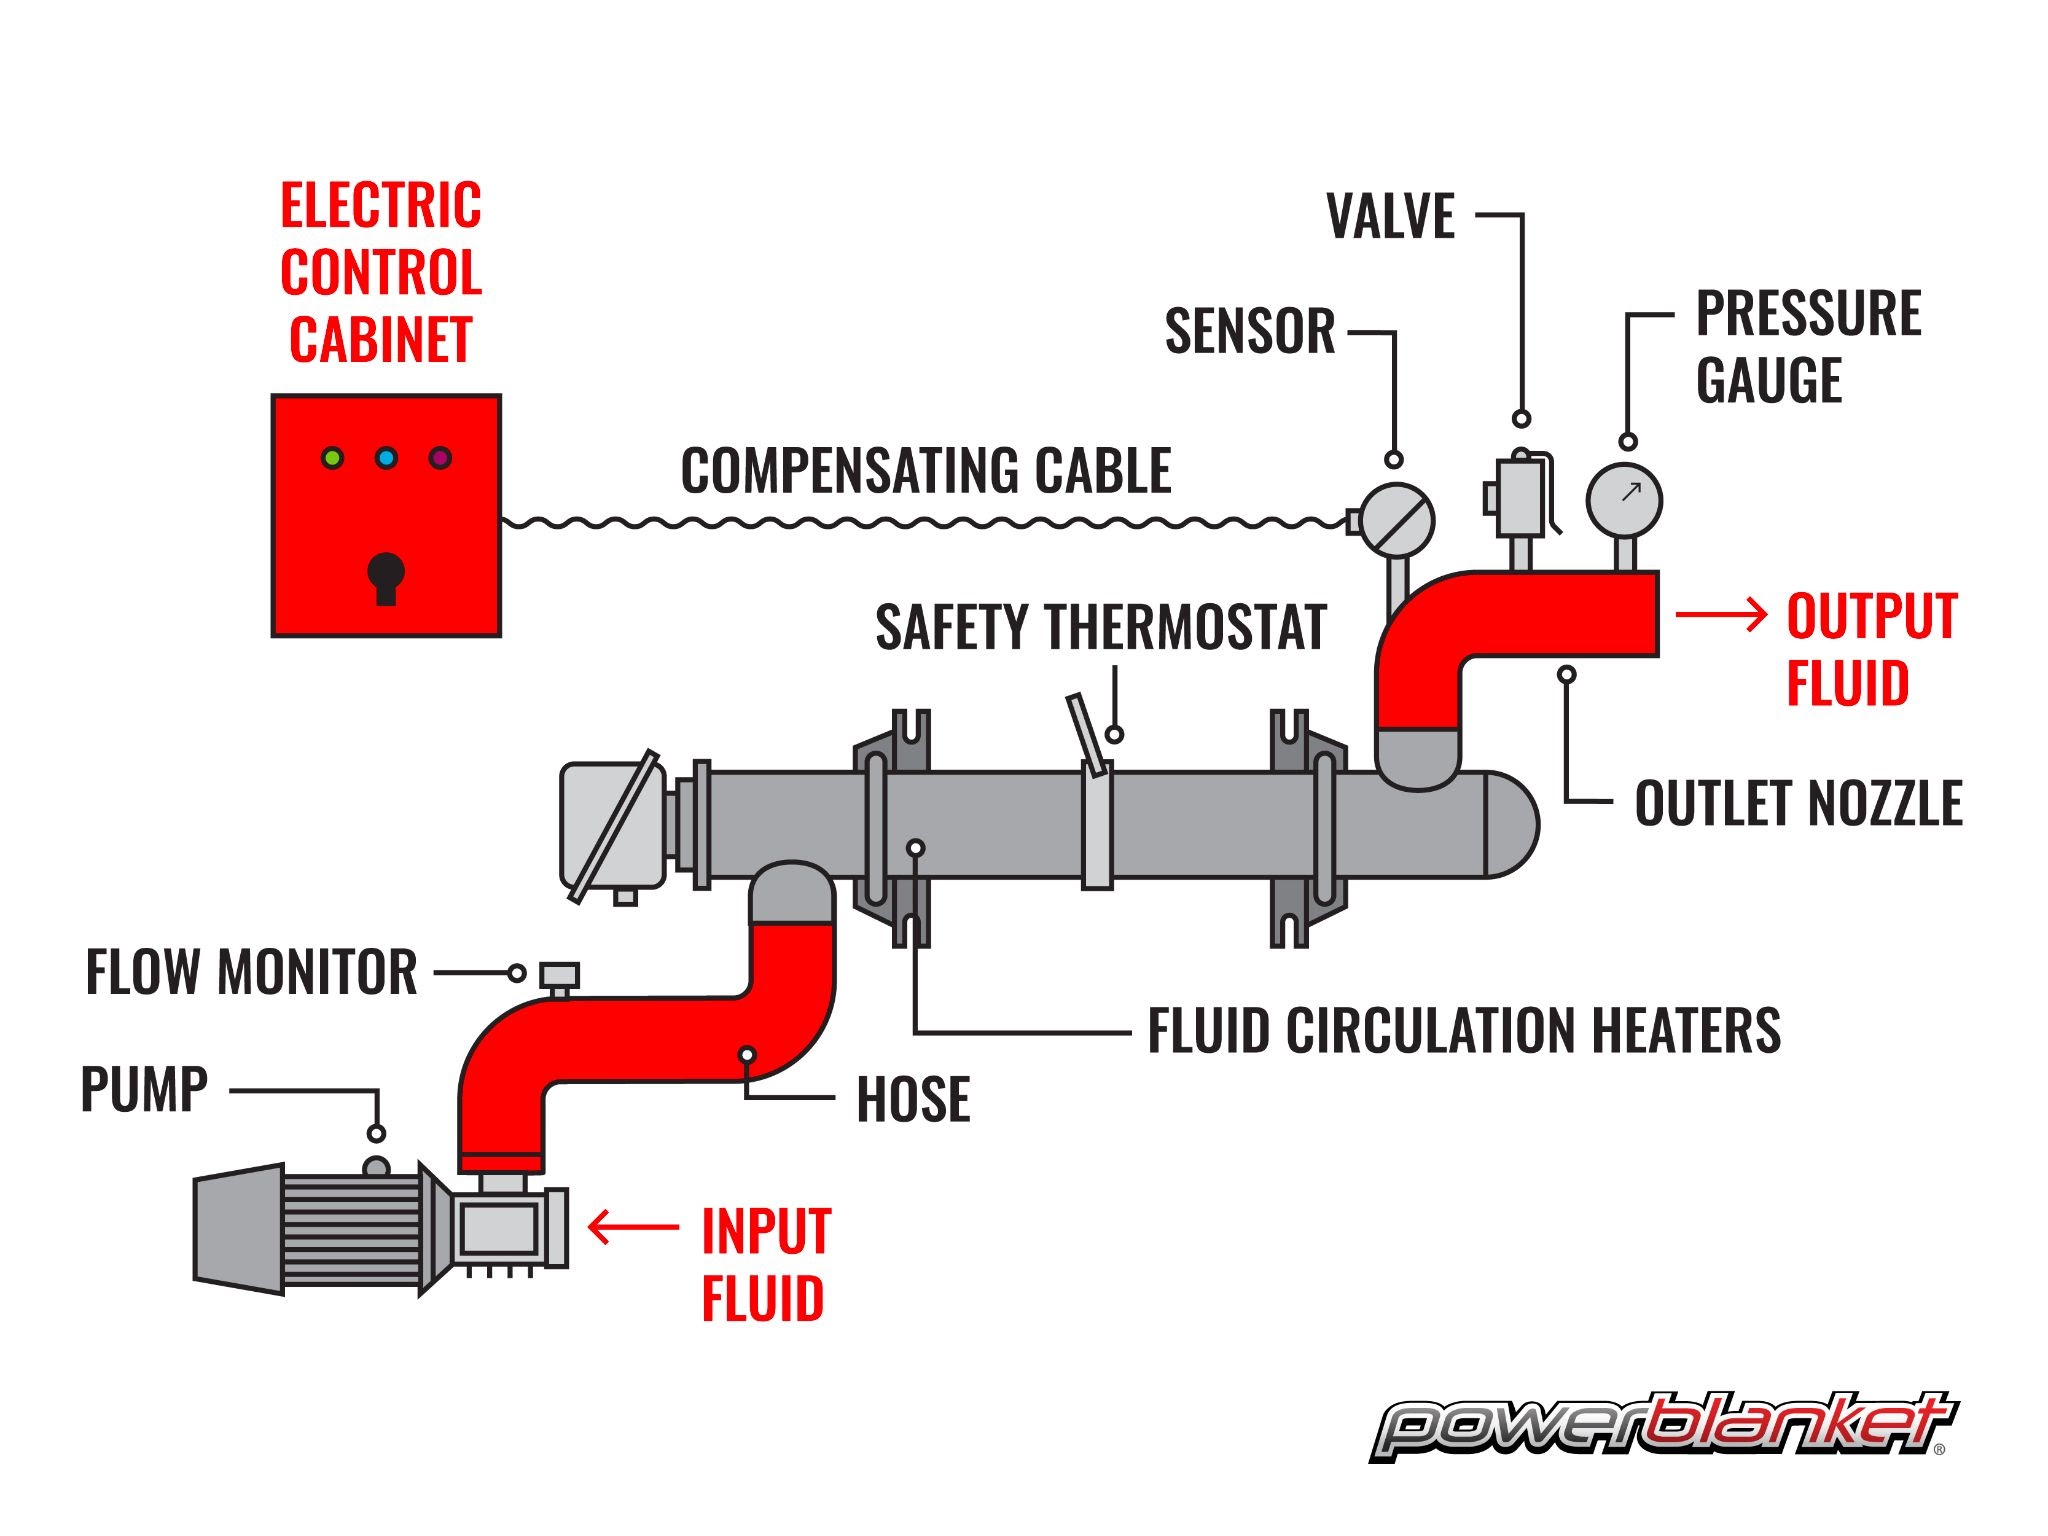 Proper Circulation Heater Sensor Placement